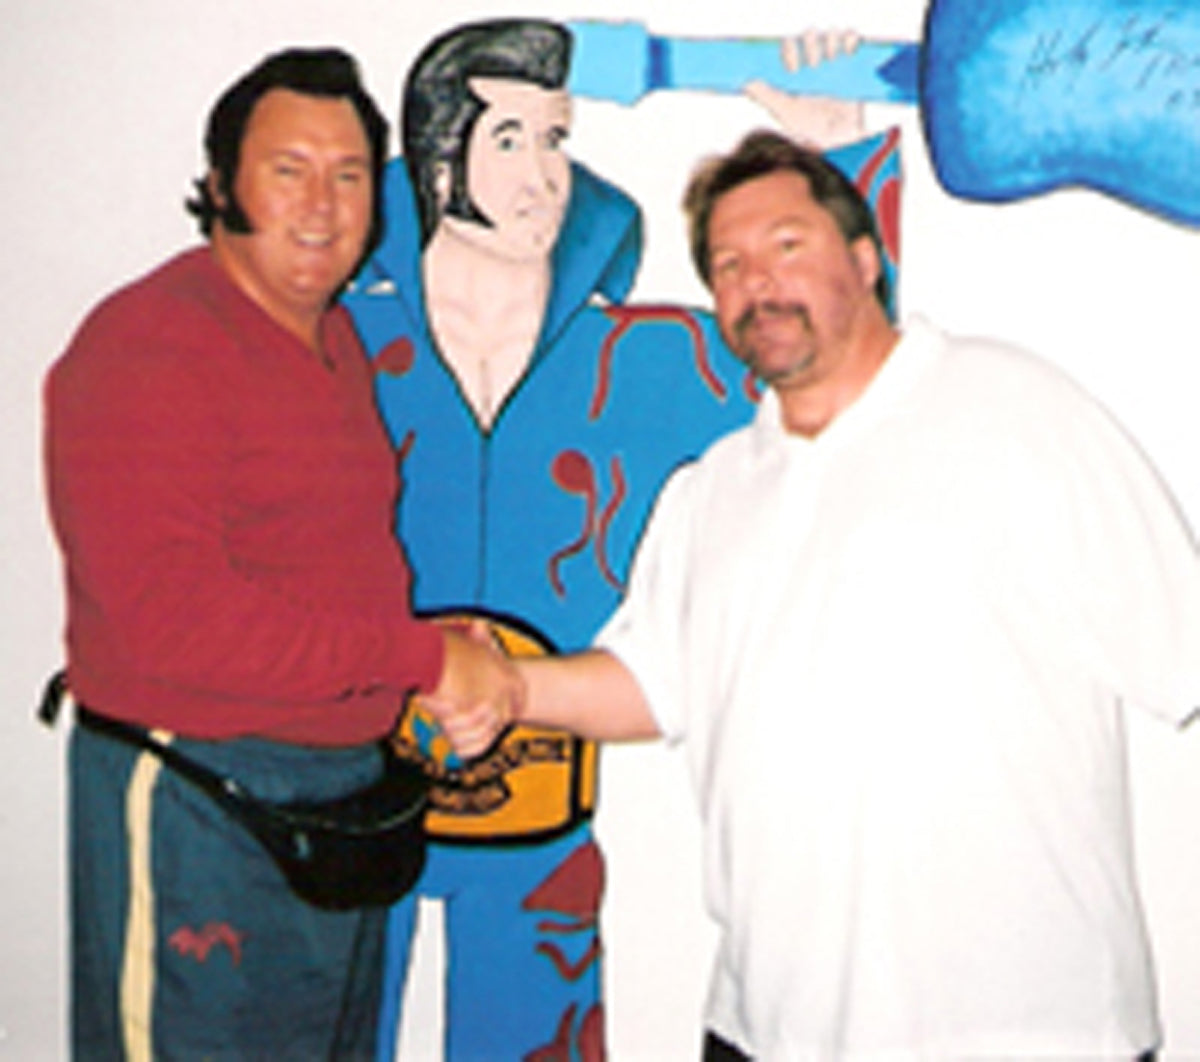 AM301  Honky Tonk Man Rugged Ronnie Garvin Signed Historical Wrestling Magazine  w/COA